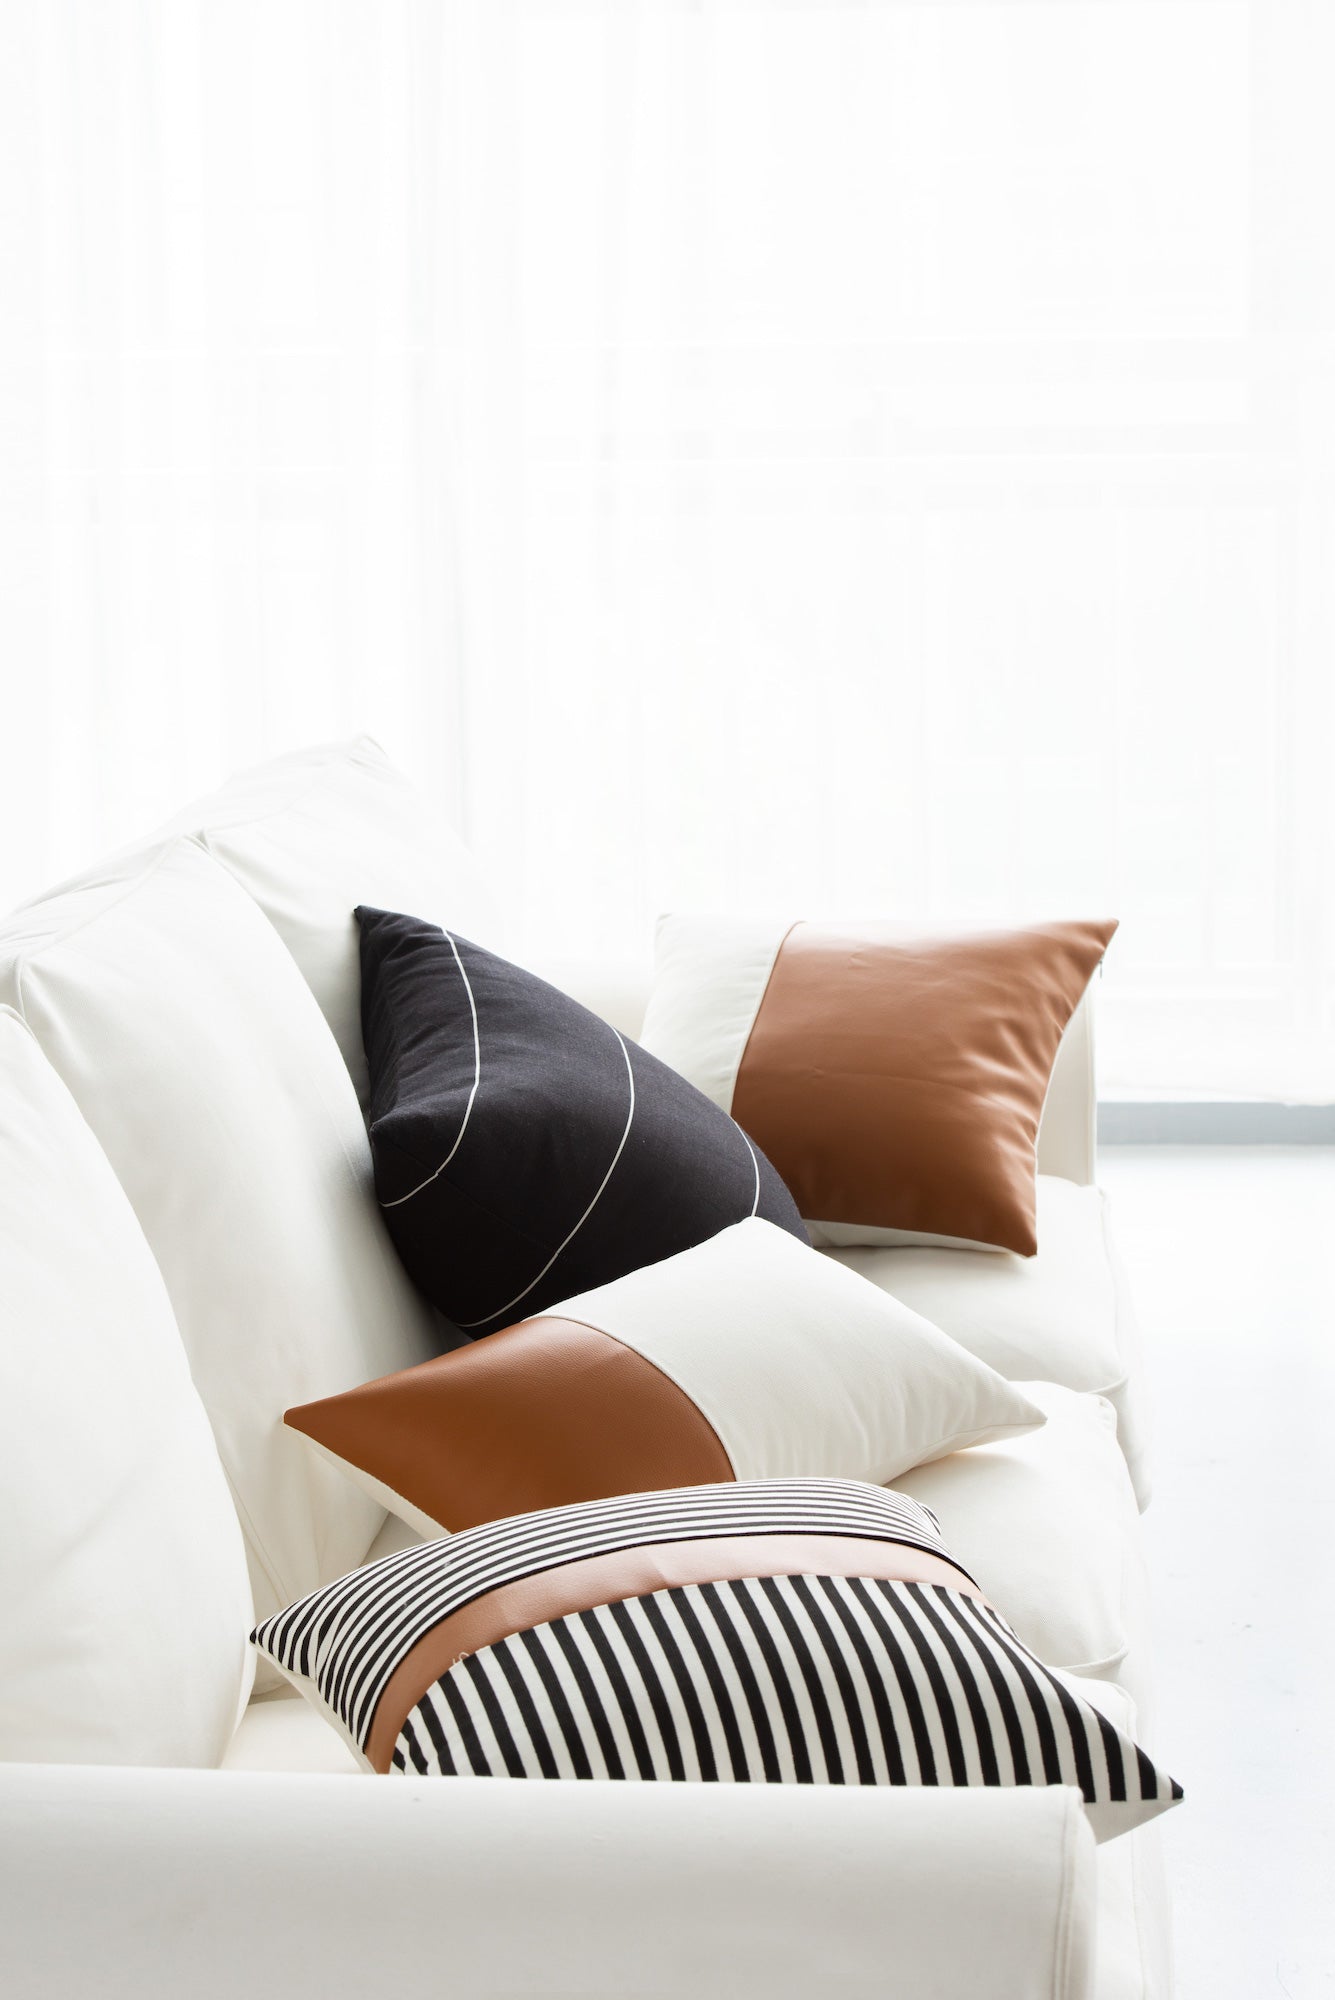 Faux Leather Pillow Cover, Modern Design Stripes, Camel Black, 18"x18"